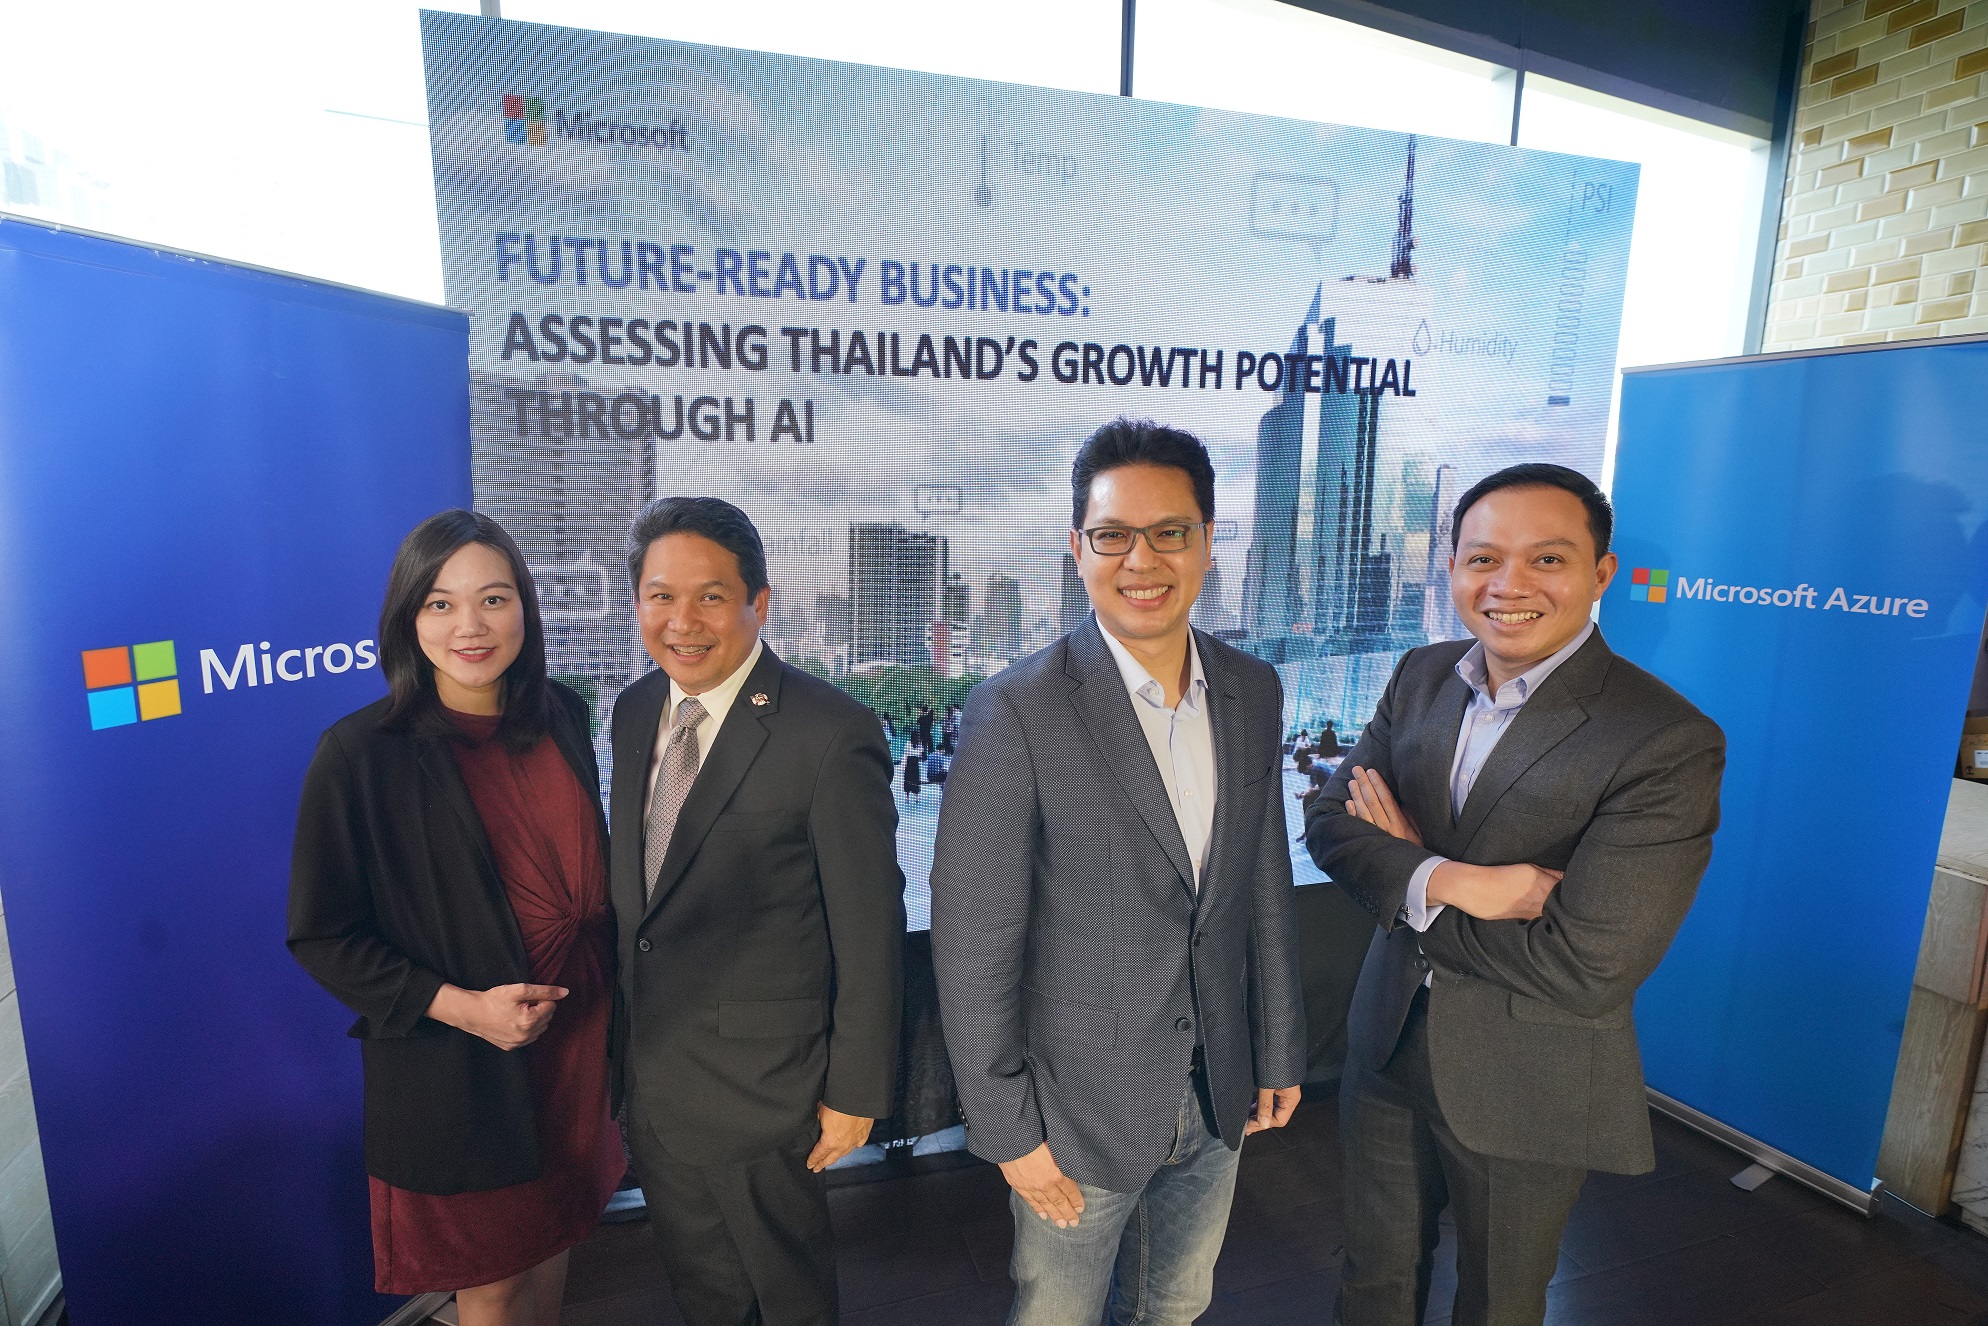 future ready business event main photo ไมโครซอฟท์ผลักดันภาคธุรกิจไทย หนุนให้นำ AI เข้าไปอยู่ในกลยุทธ์หลัก